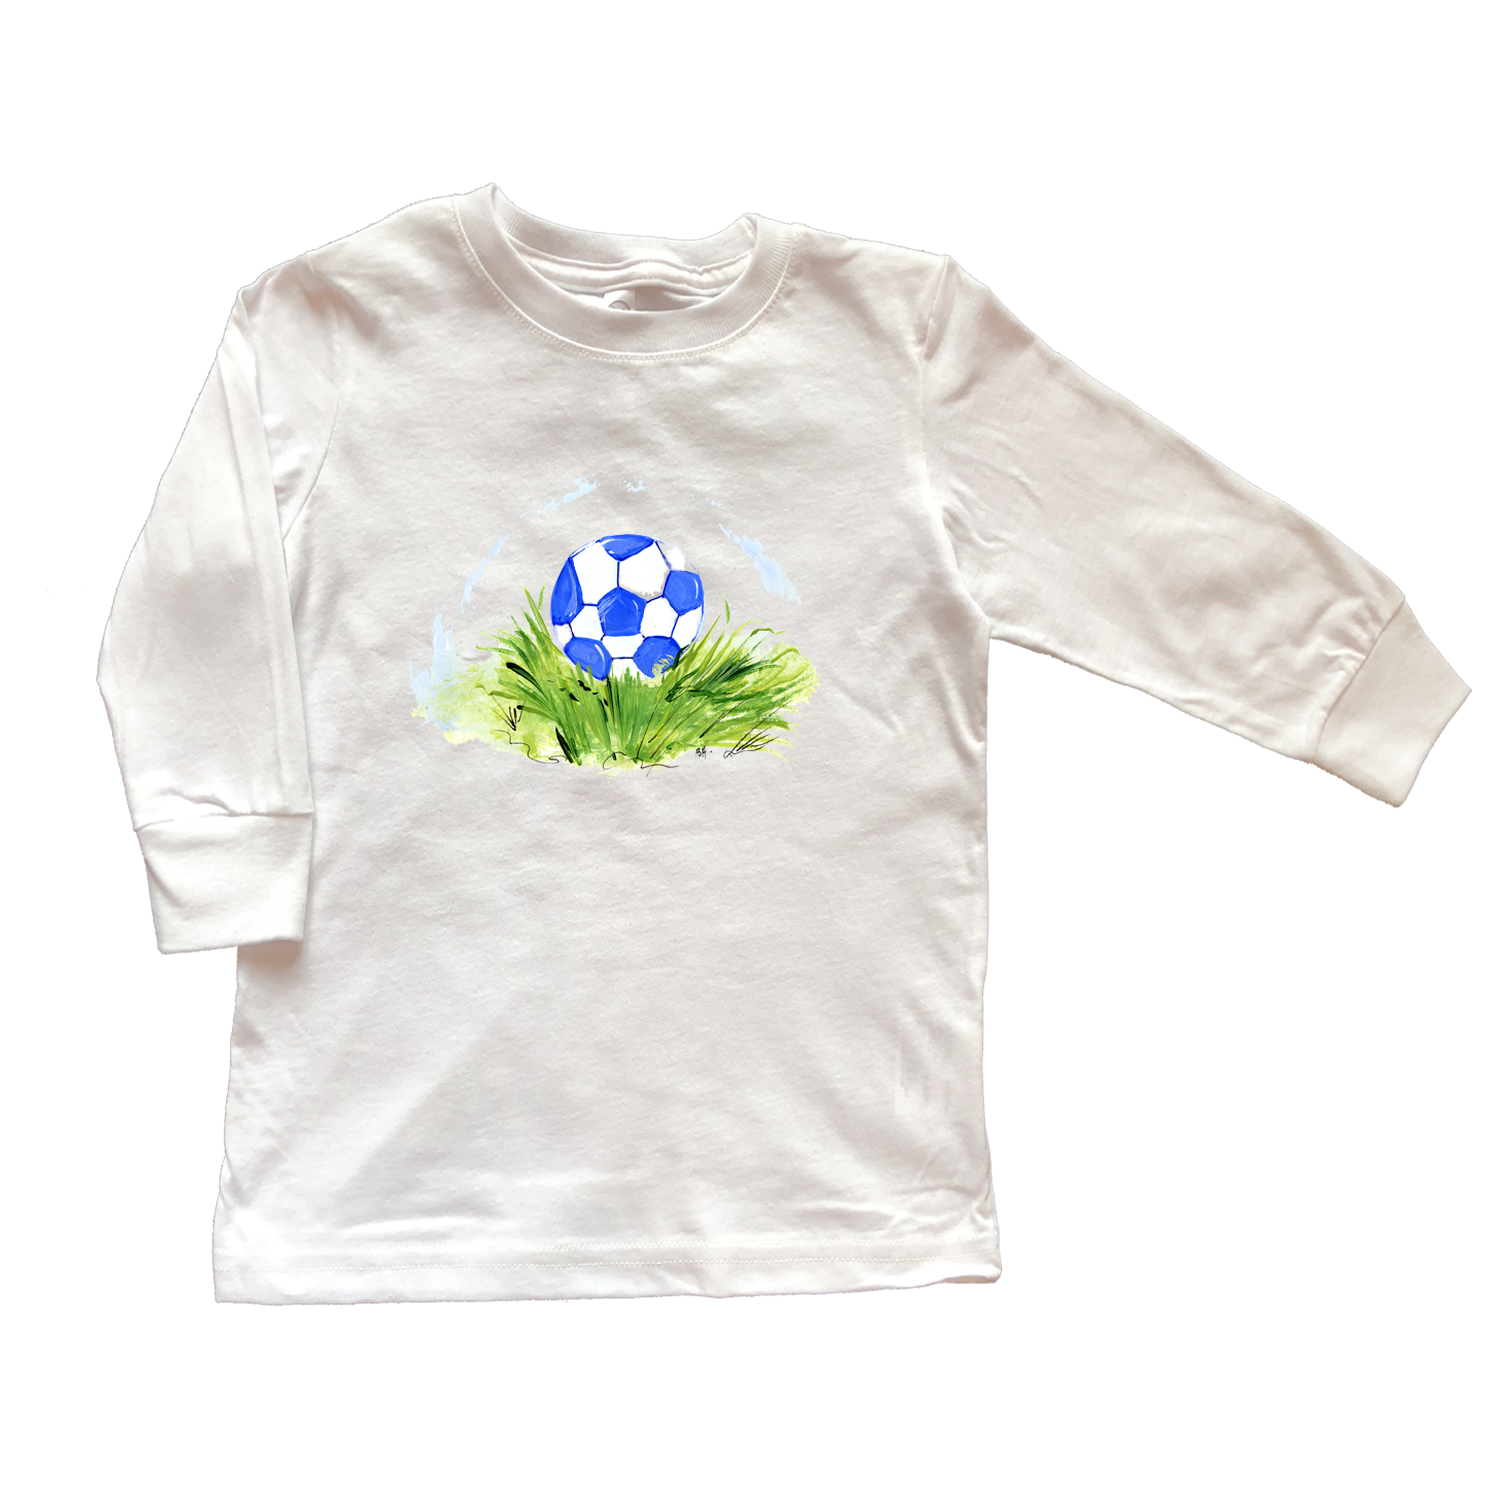 Cotton Tee Shirt Long Sleeve 605 Soccer